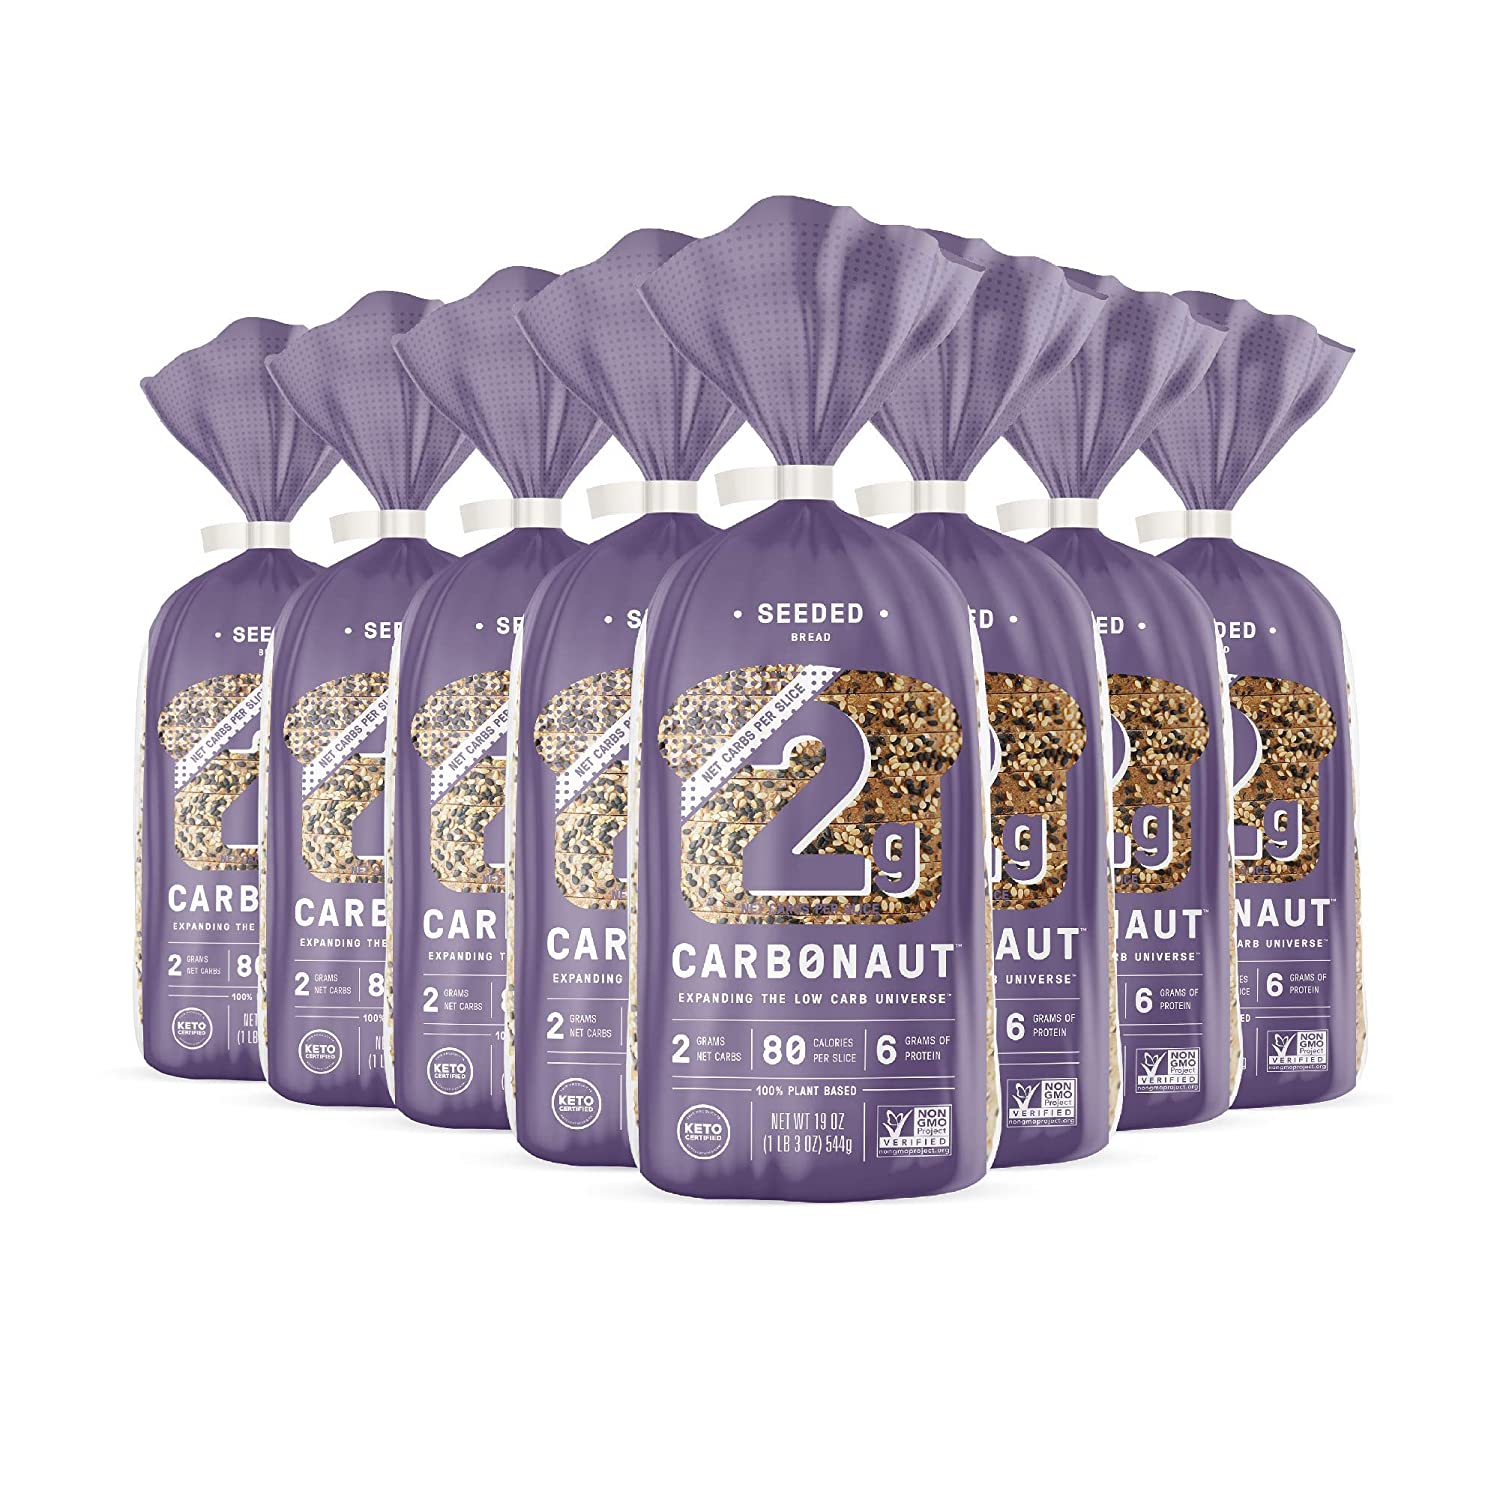 Carbonaut Low Carb Seeded Bread, Non-GMO, Vegan, Sugar Free, Keto Bread (8 pack)